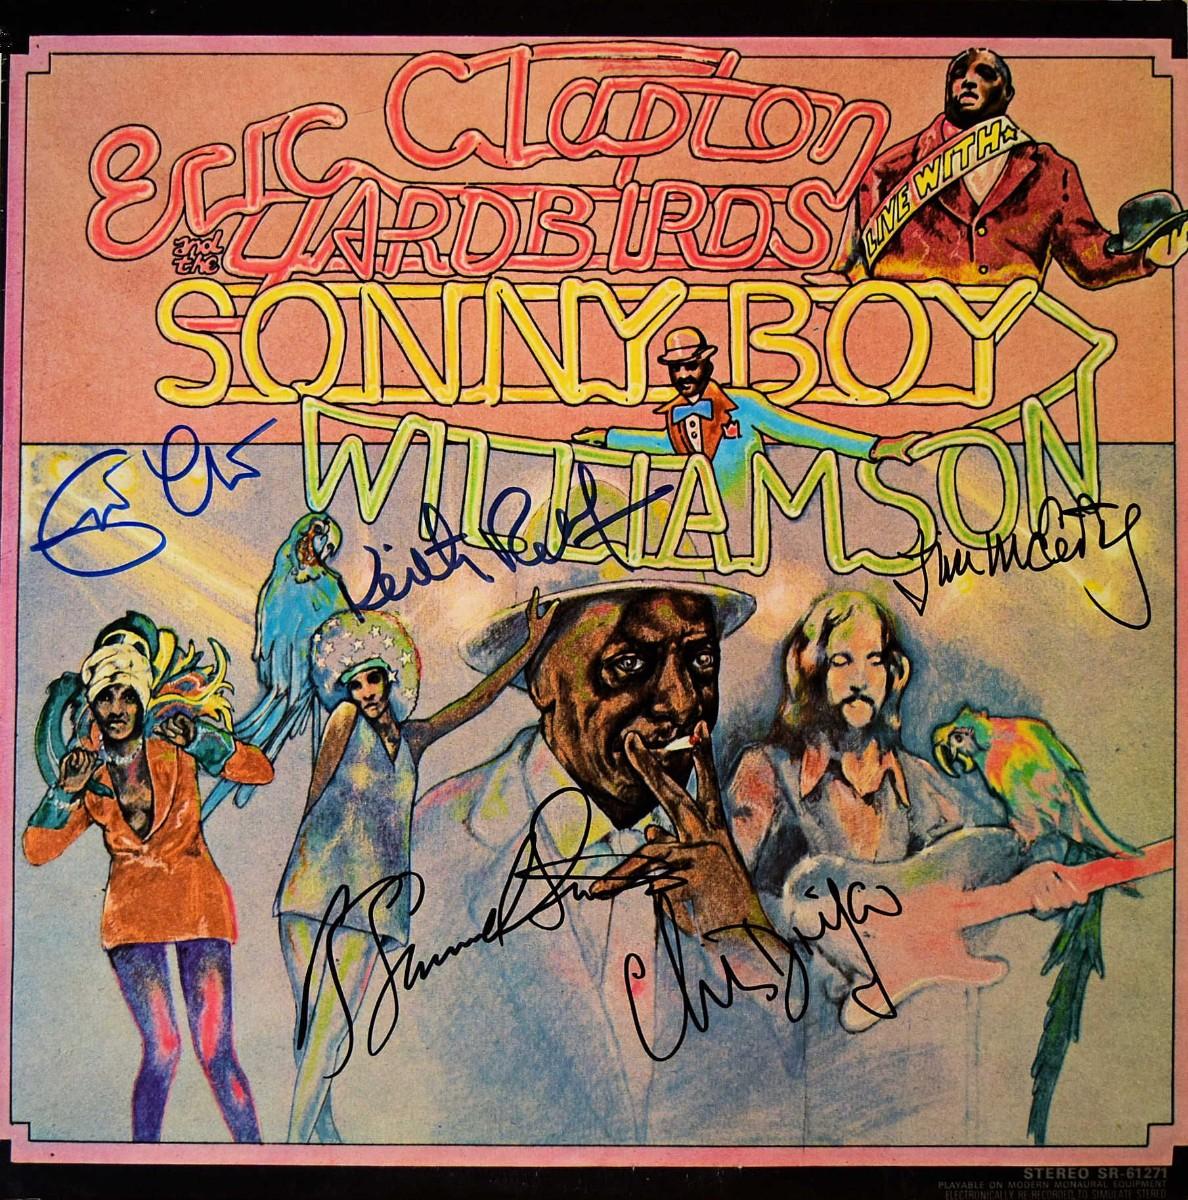 The Yardbirds signed Sonny Boy Williamson & the Yardbirds album ...